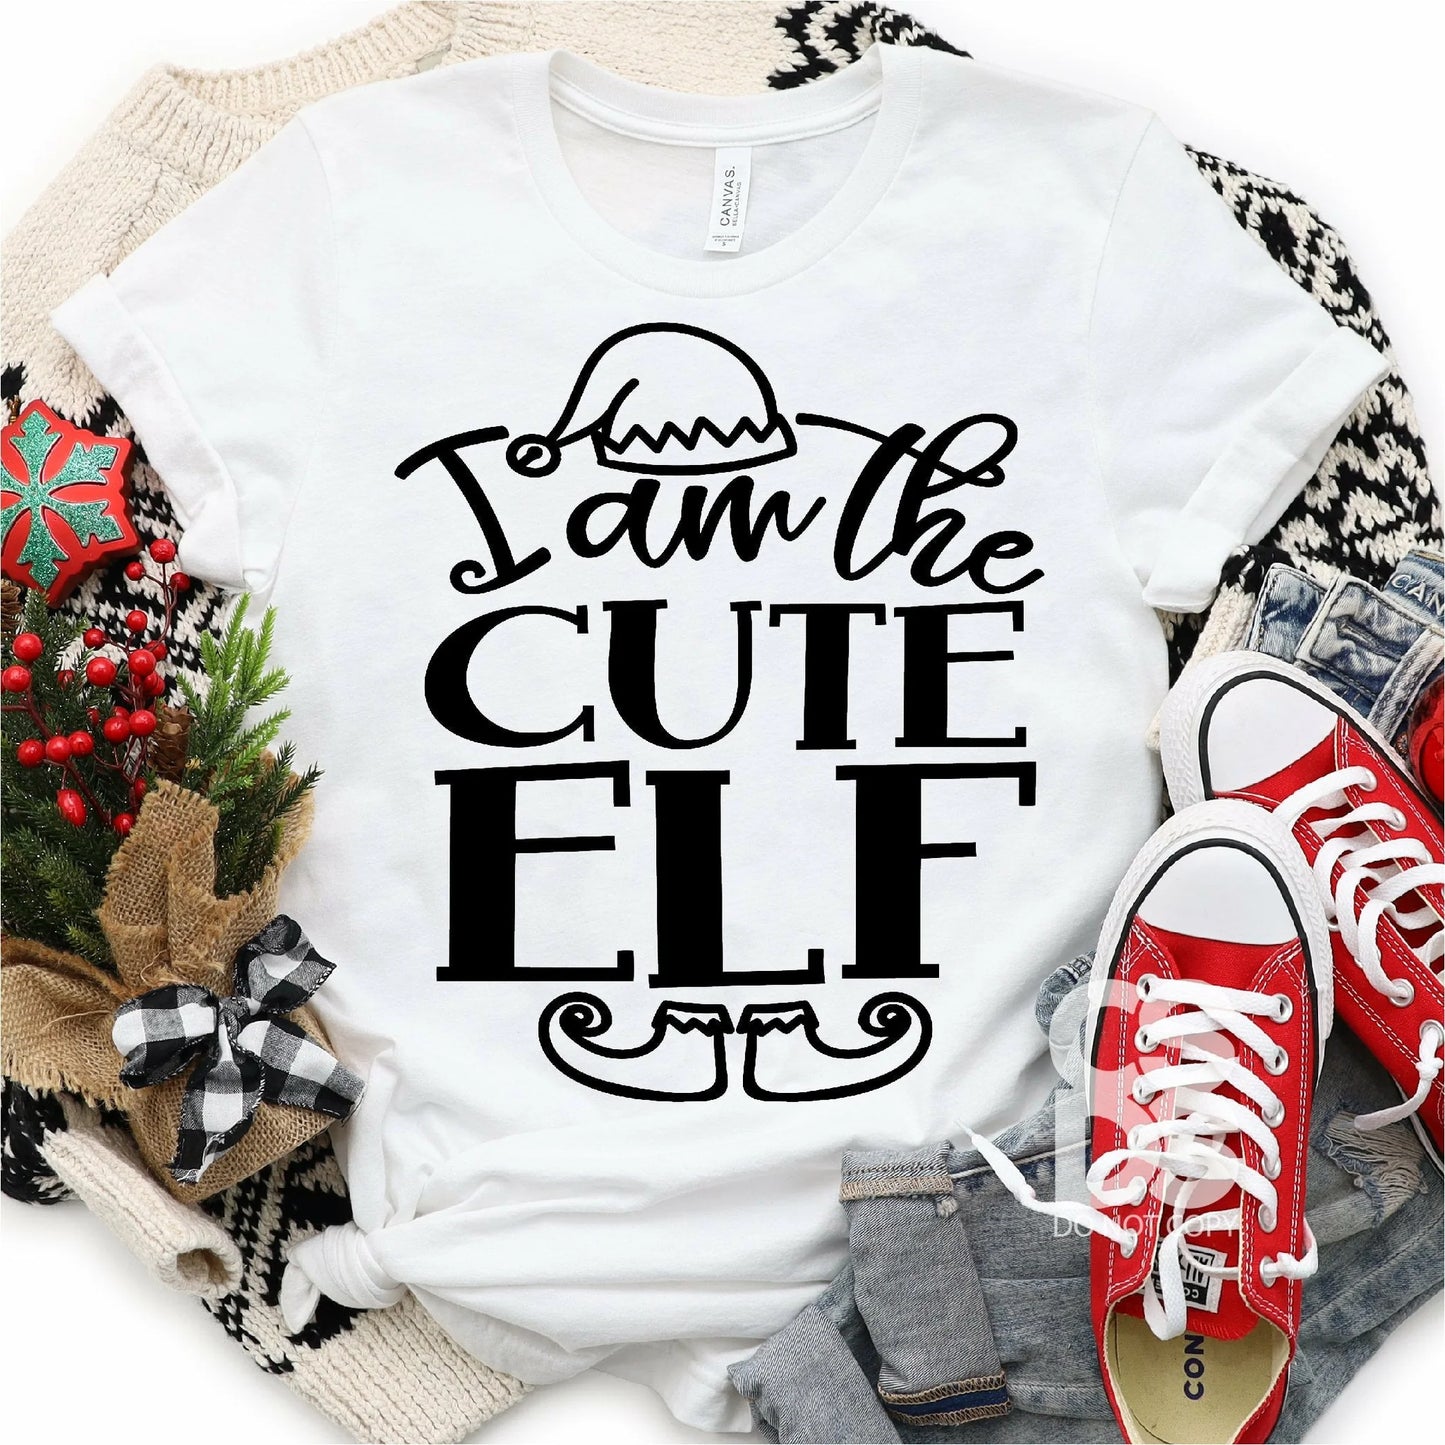 I am the Cute Elf